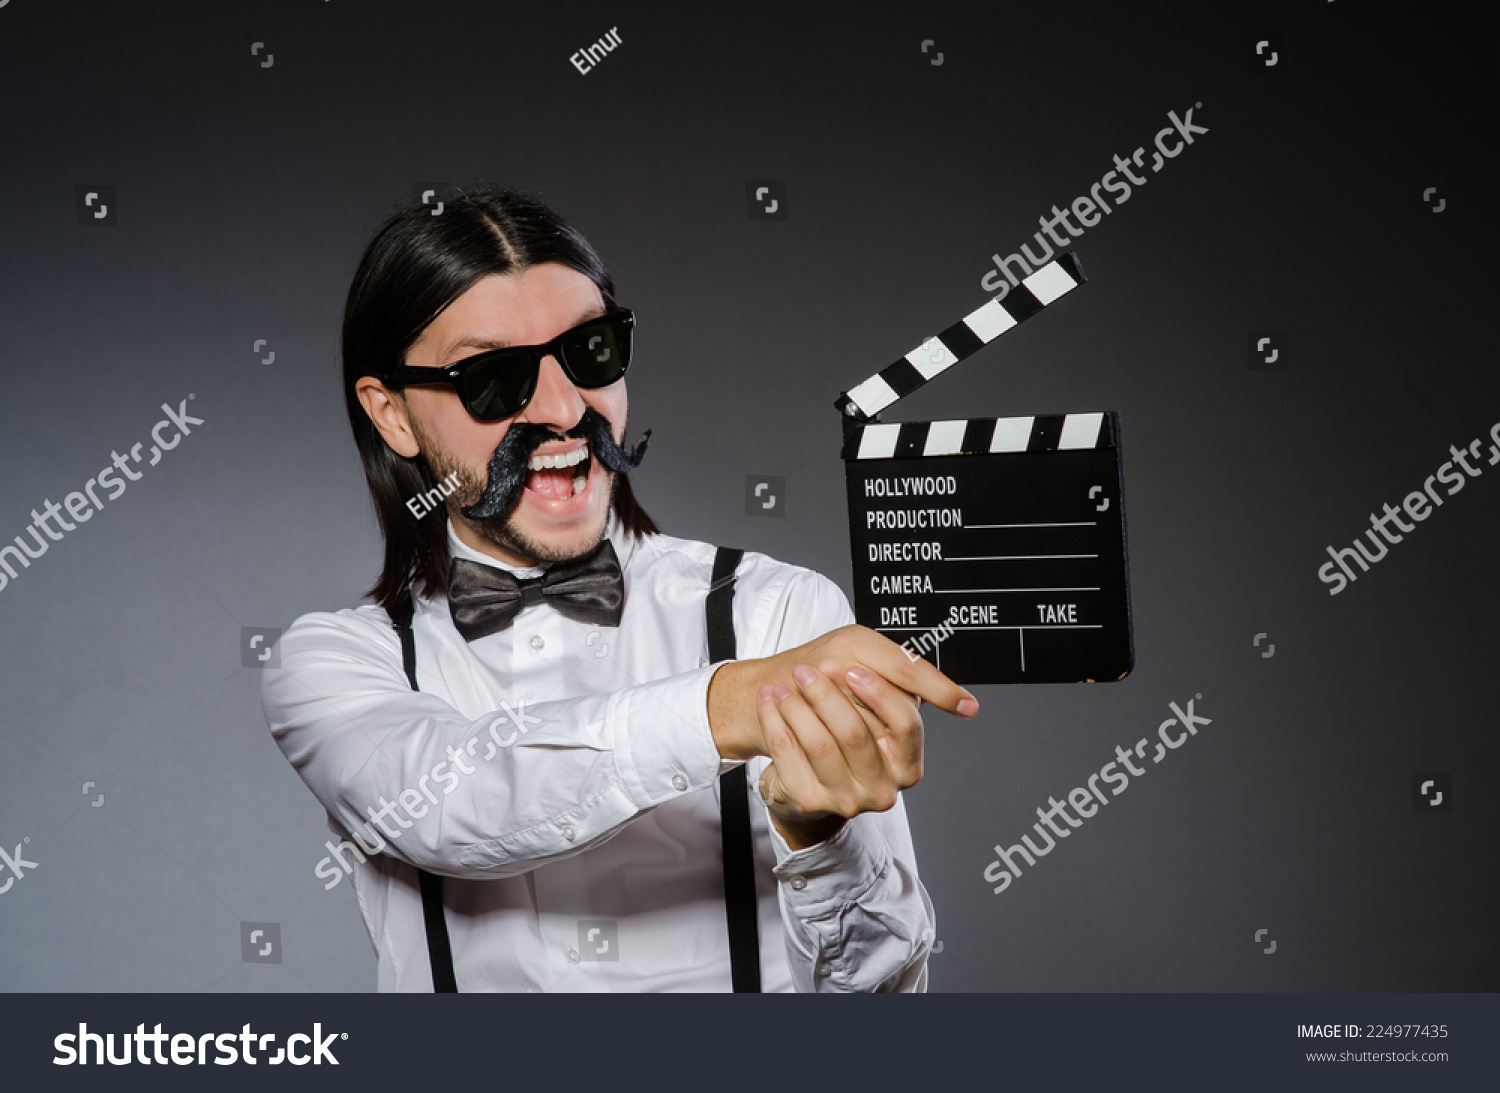 Funny Man Movie Clapboard Stock Photo 224977435 | Shutterstock